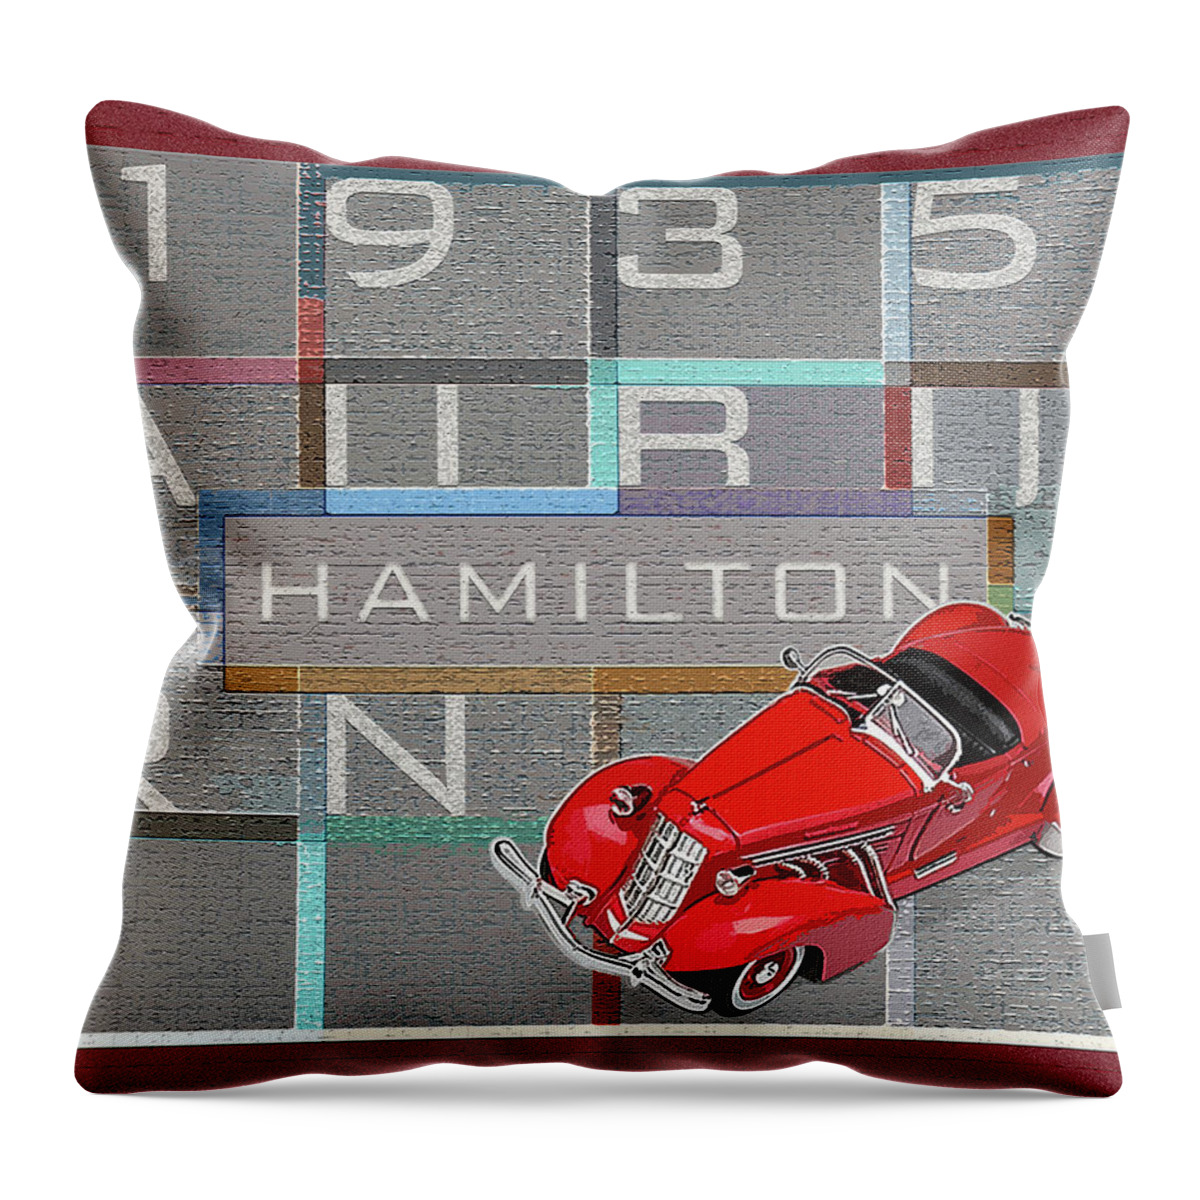 Hamilton Collection Throw Pillow featuring the digital art Hamilton Collection / 1935 Auburn by David Squibb